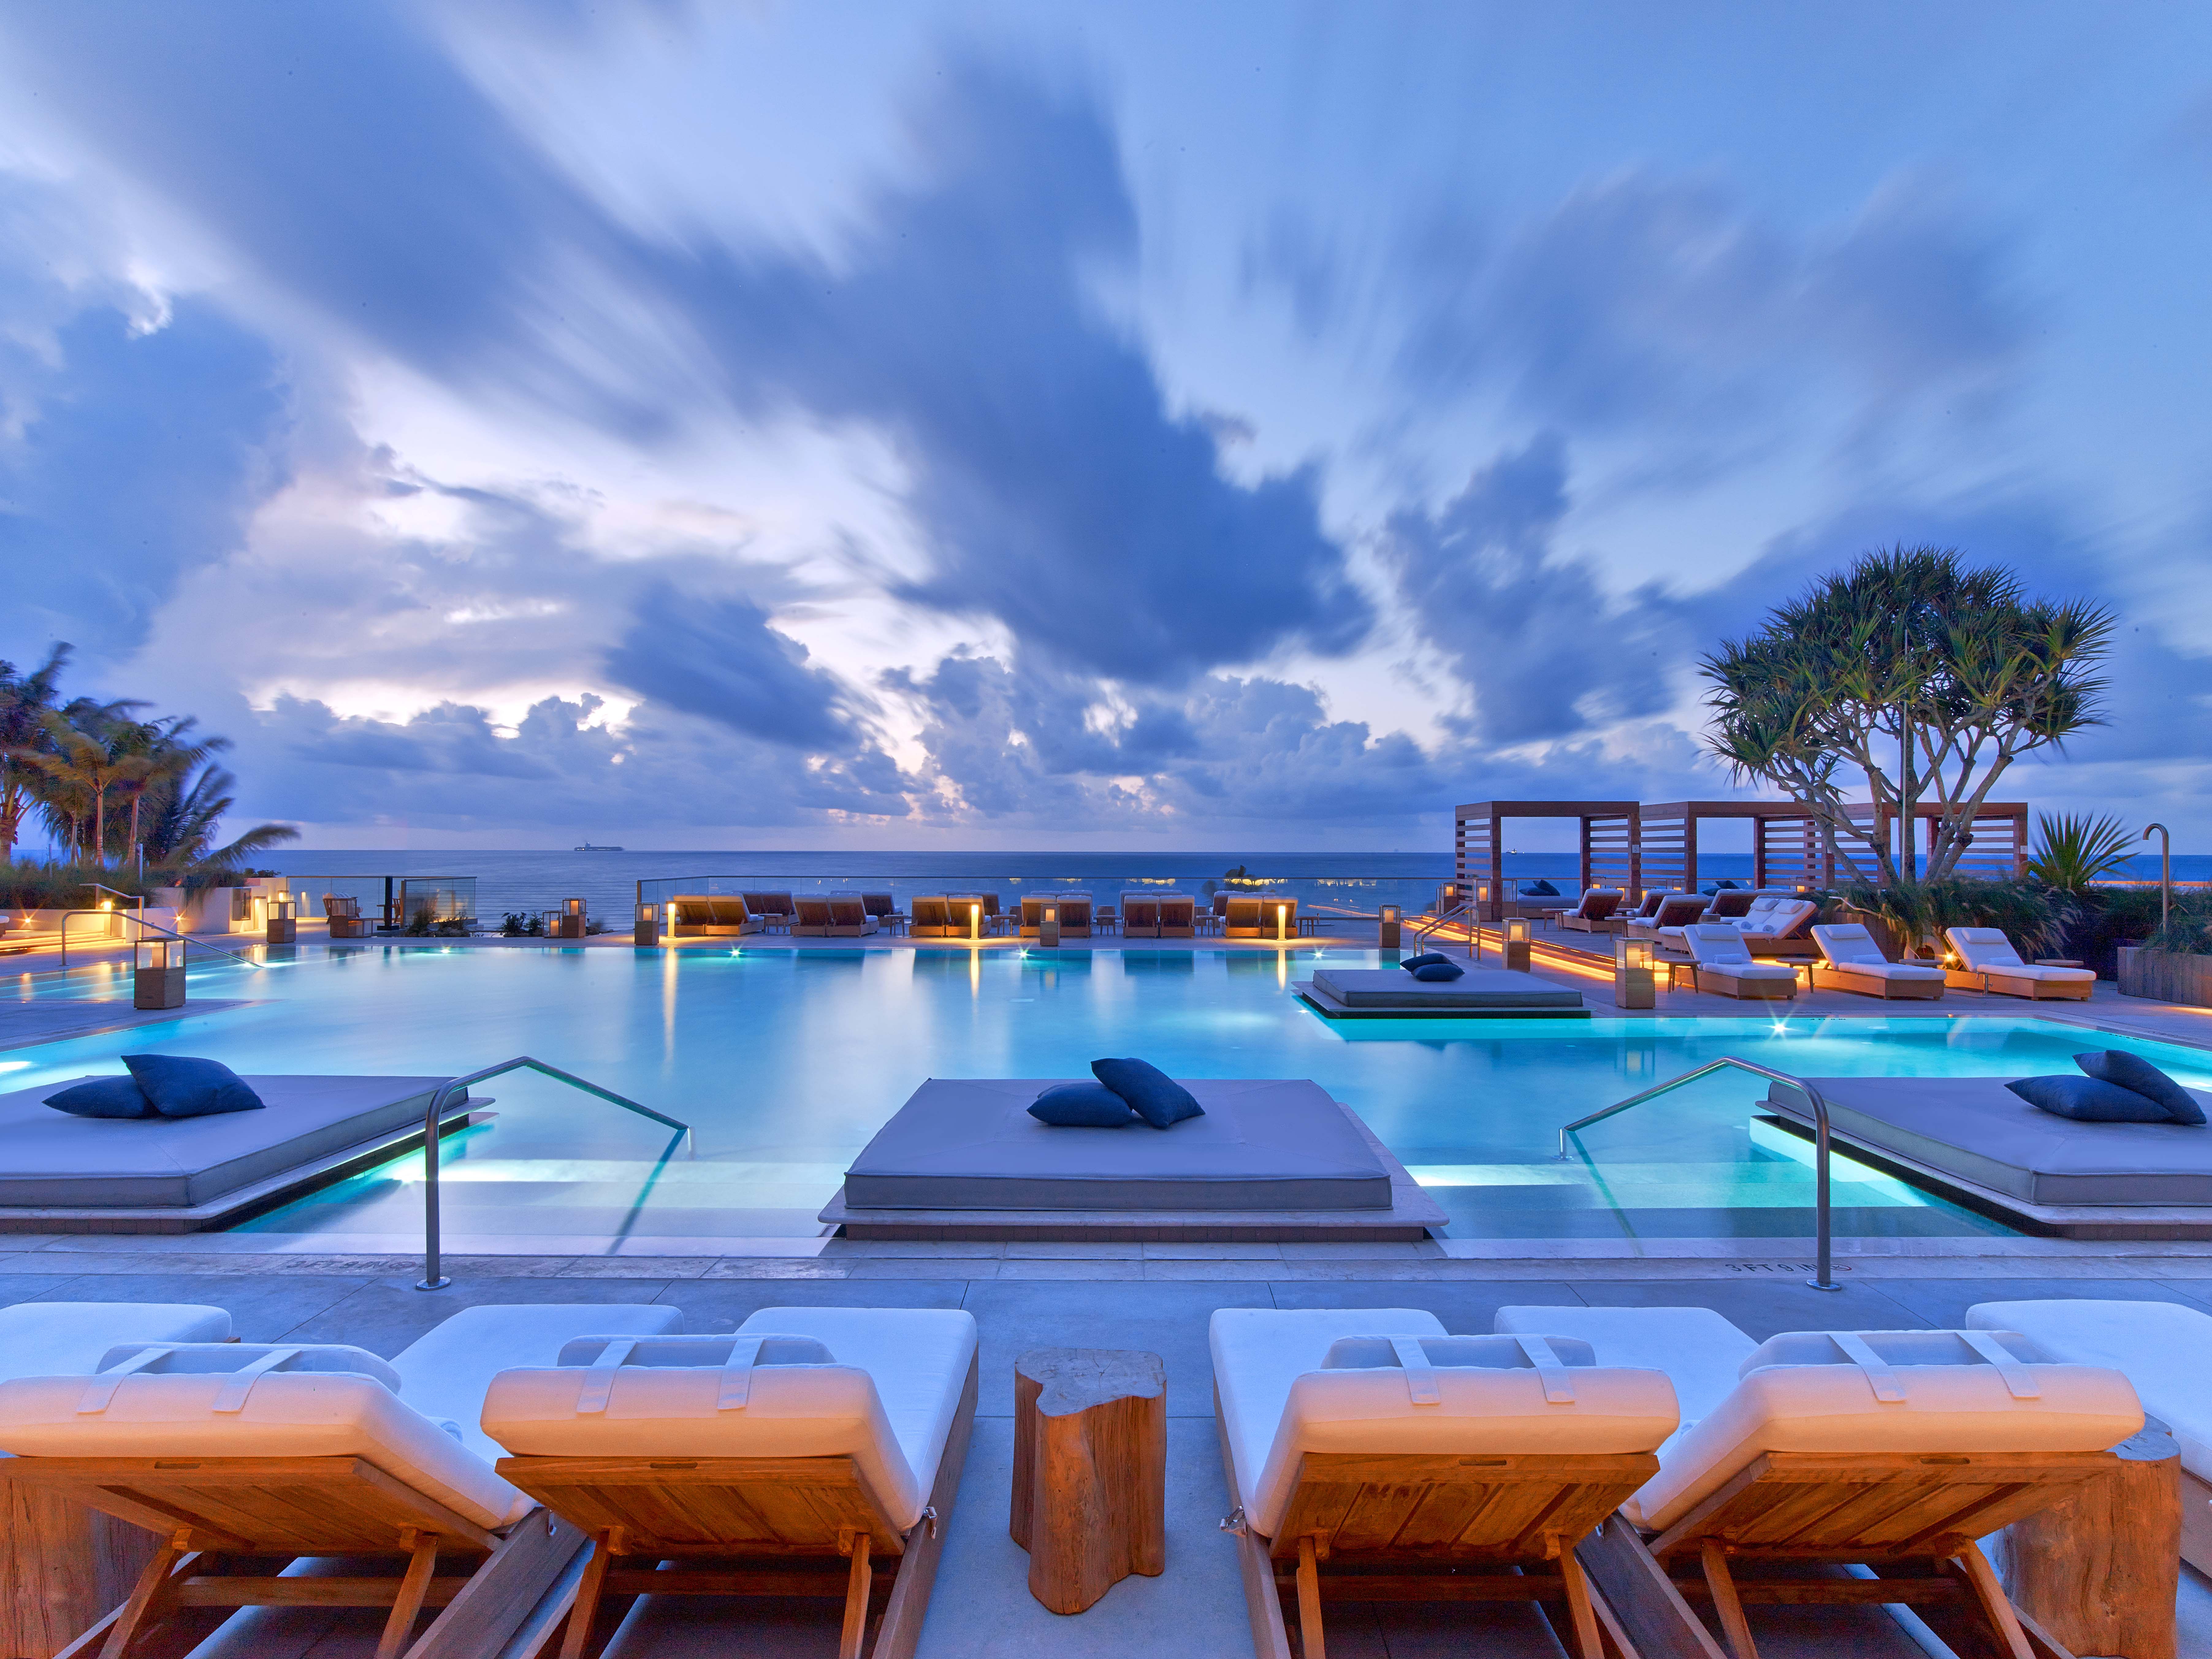 The Best Hotel for ART BASEL Miami Beach; 1 HOTEL & HOMES SOUTH BEACH